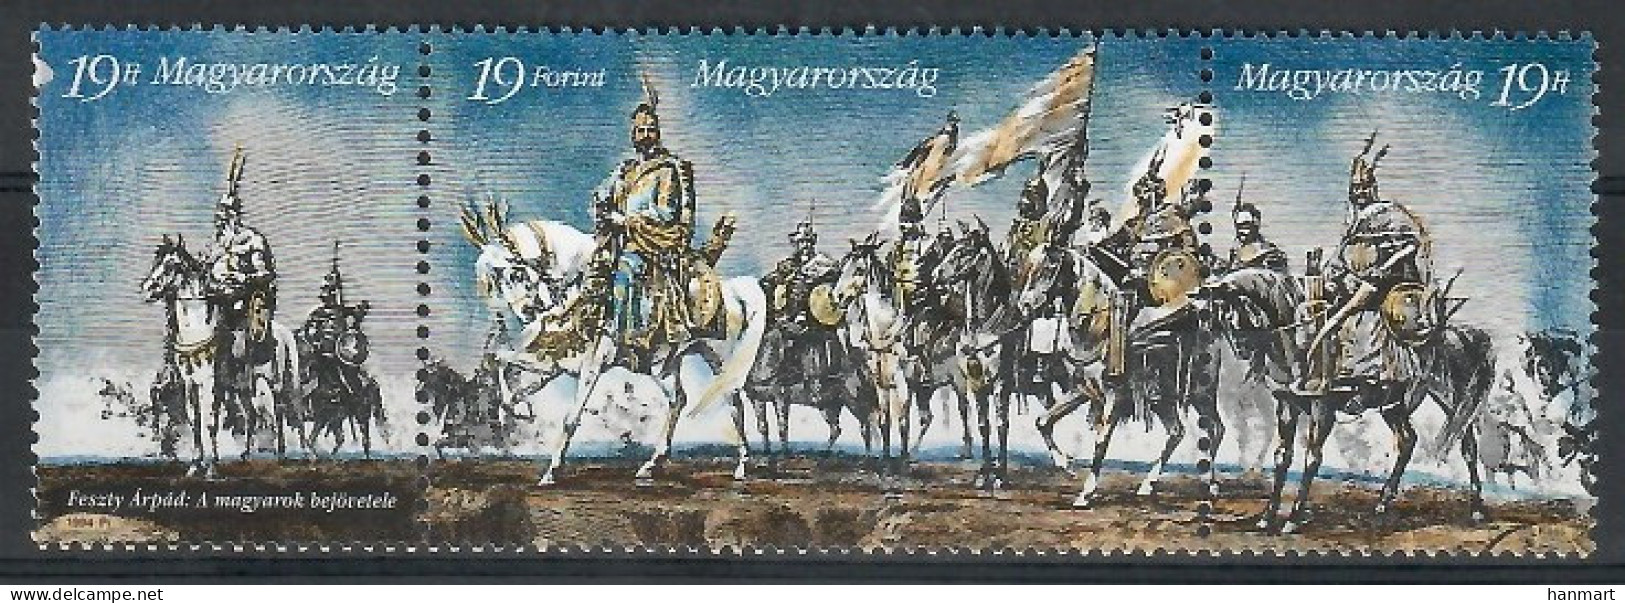 Hungary 1994 Mi 4289-4291 MNH  (ZE4 HNGdre4289-4291) - Stamps